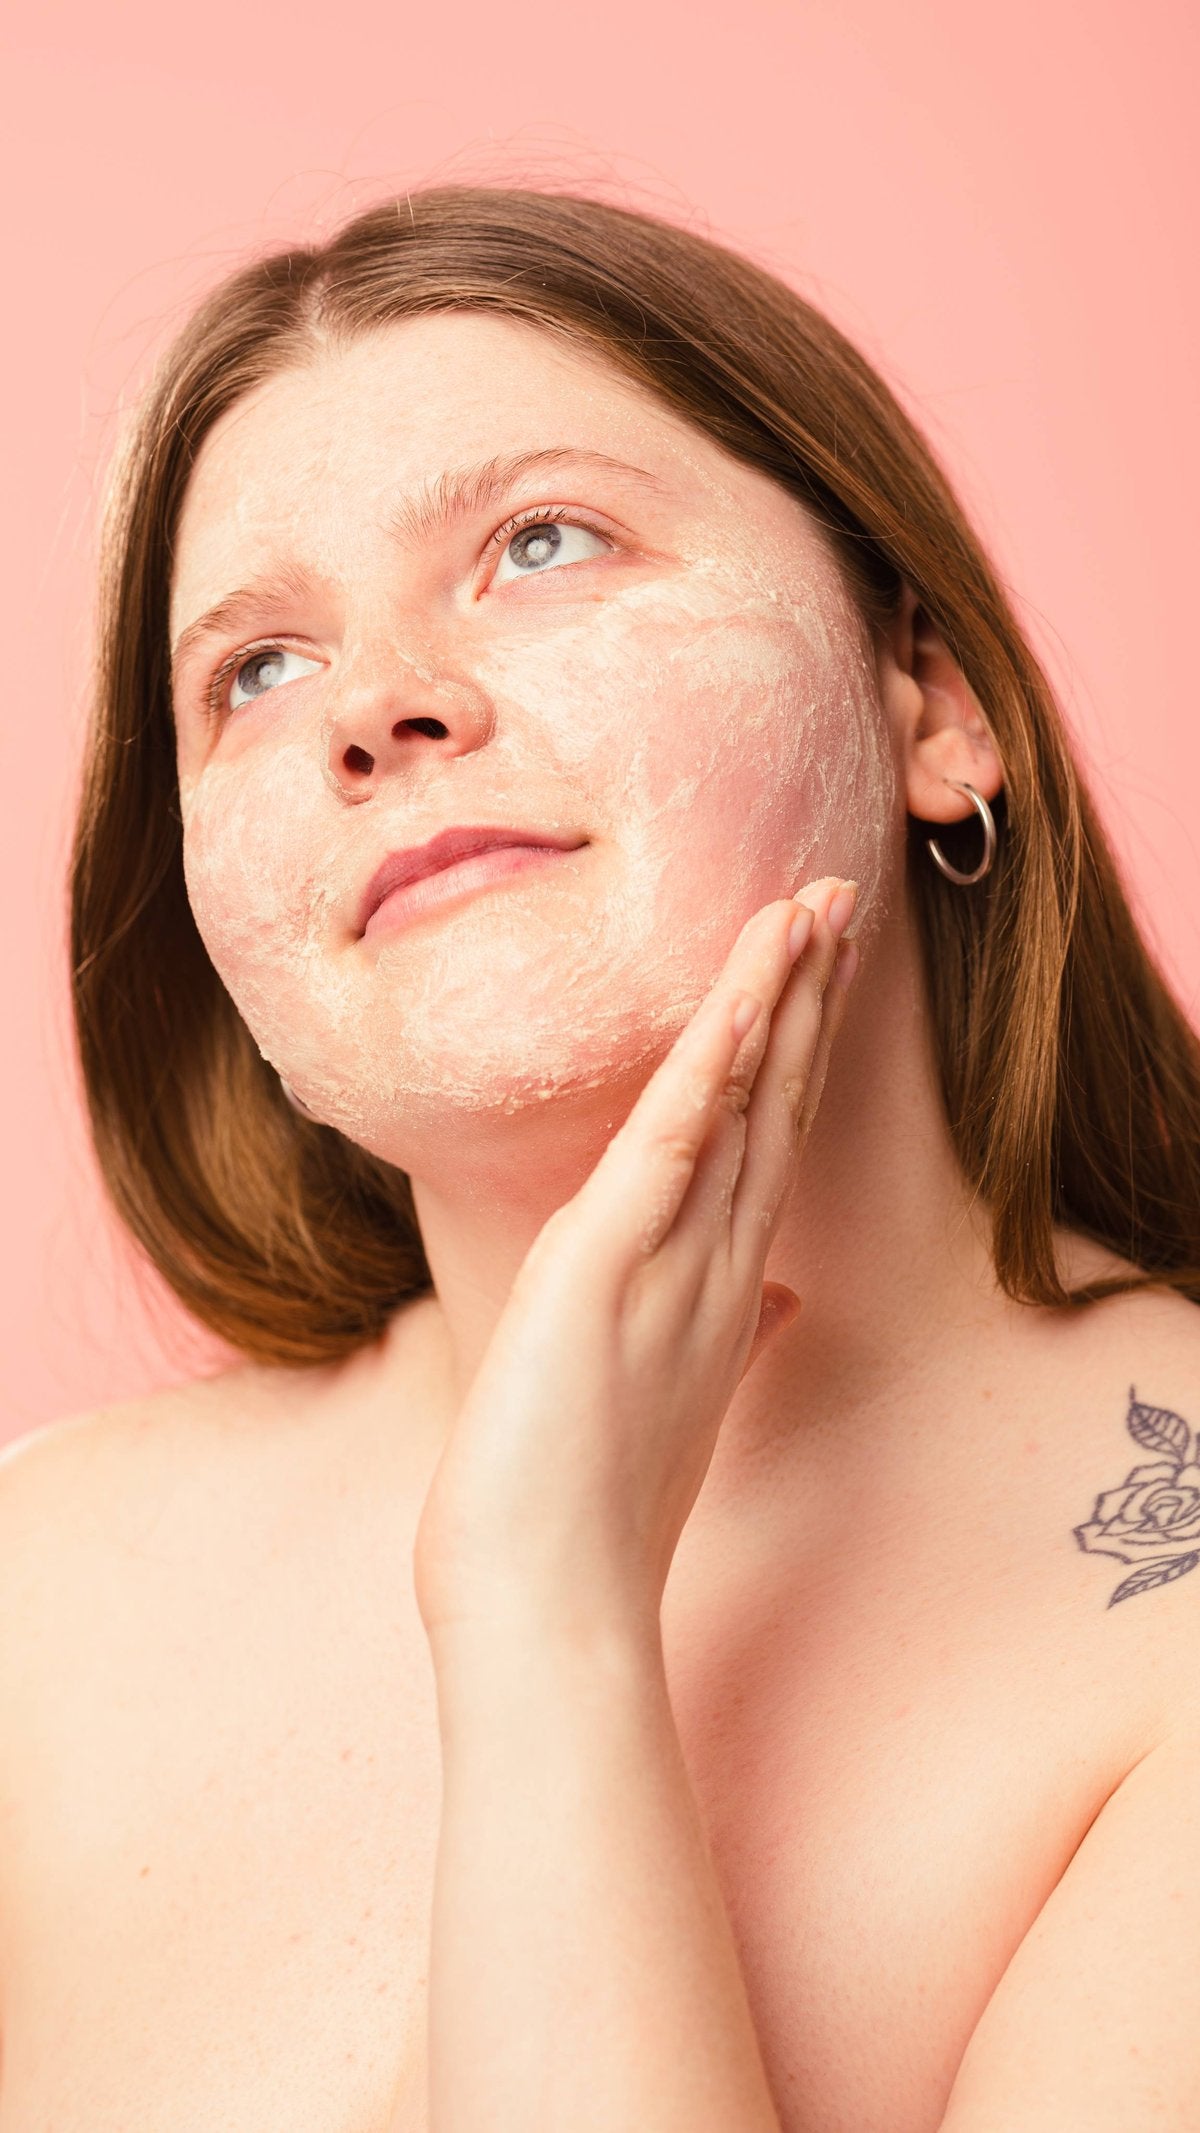 Lush Cosmetics Happy Skin
ENZYMIC FACIAL EXFOLIATOR 100g